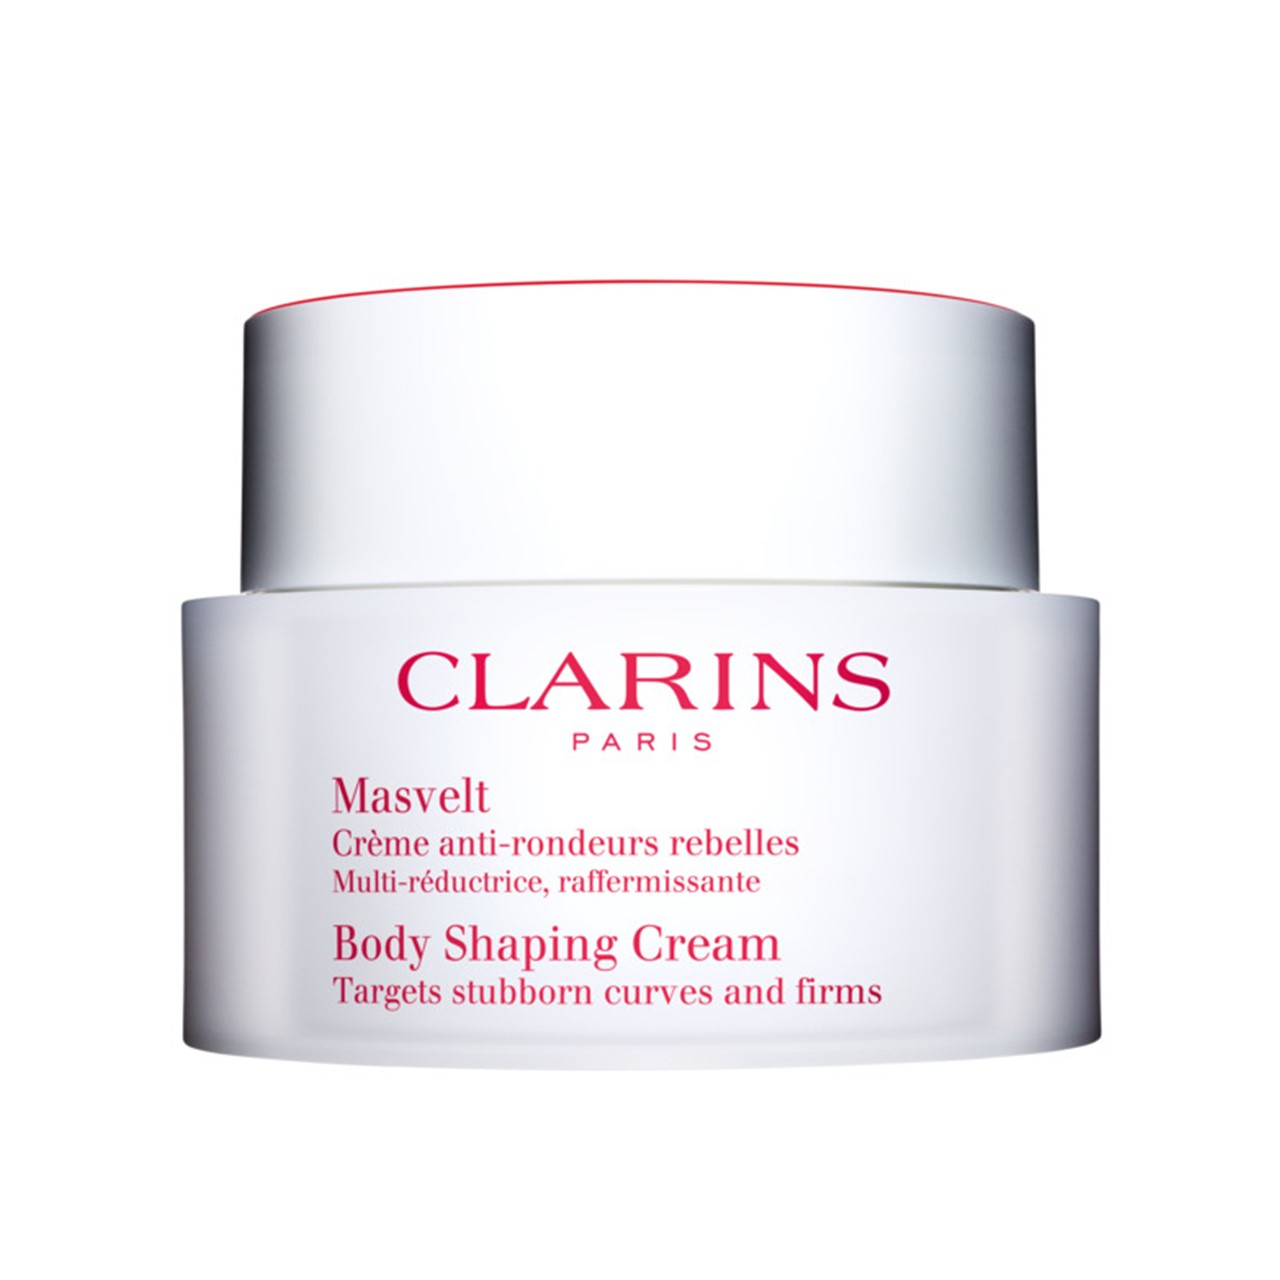 Best Clarins products: Clarins Masvelt Body Shaping Cream